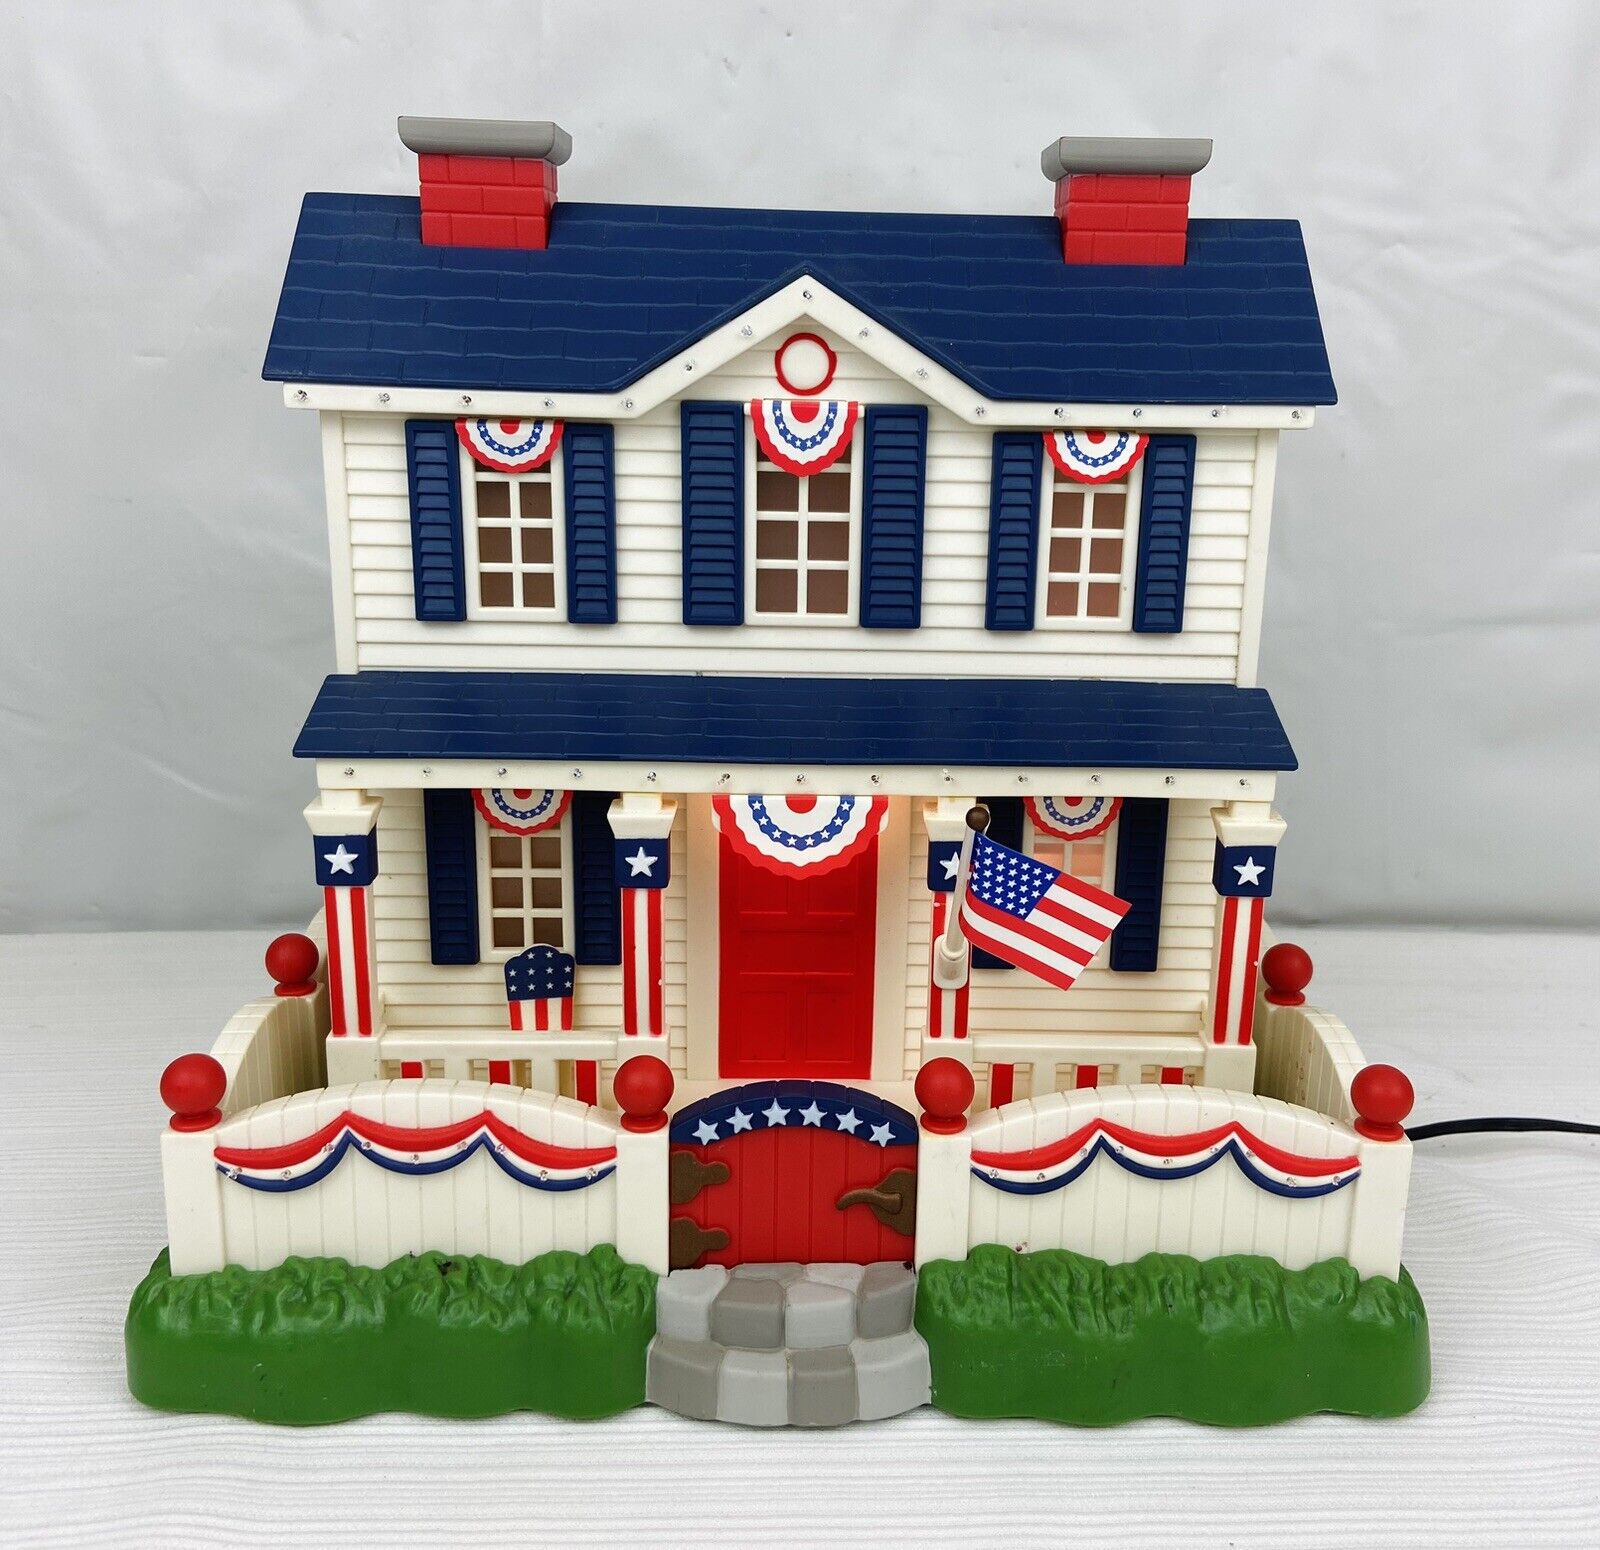 Vintage Patriotic Lighted House 9.5” Tall July 4th Decoration Village Plastic